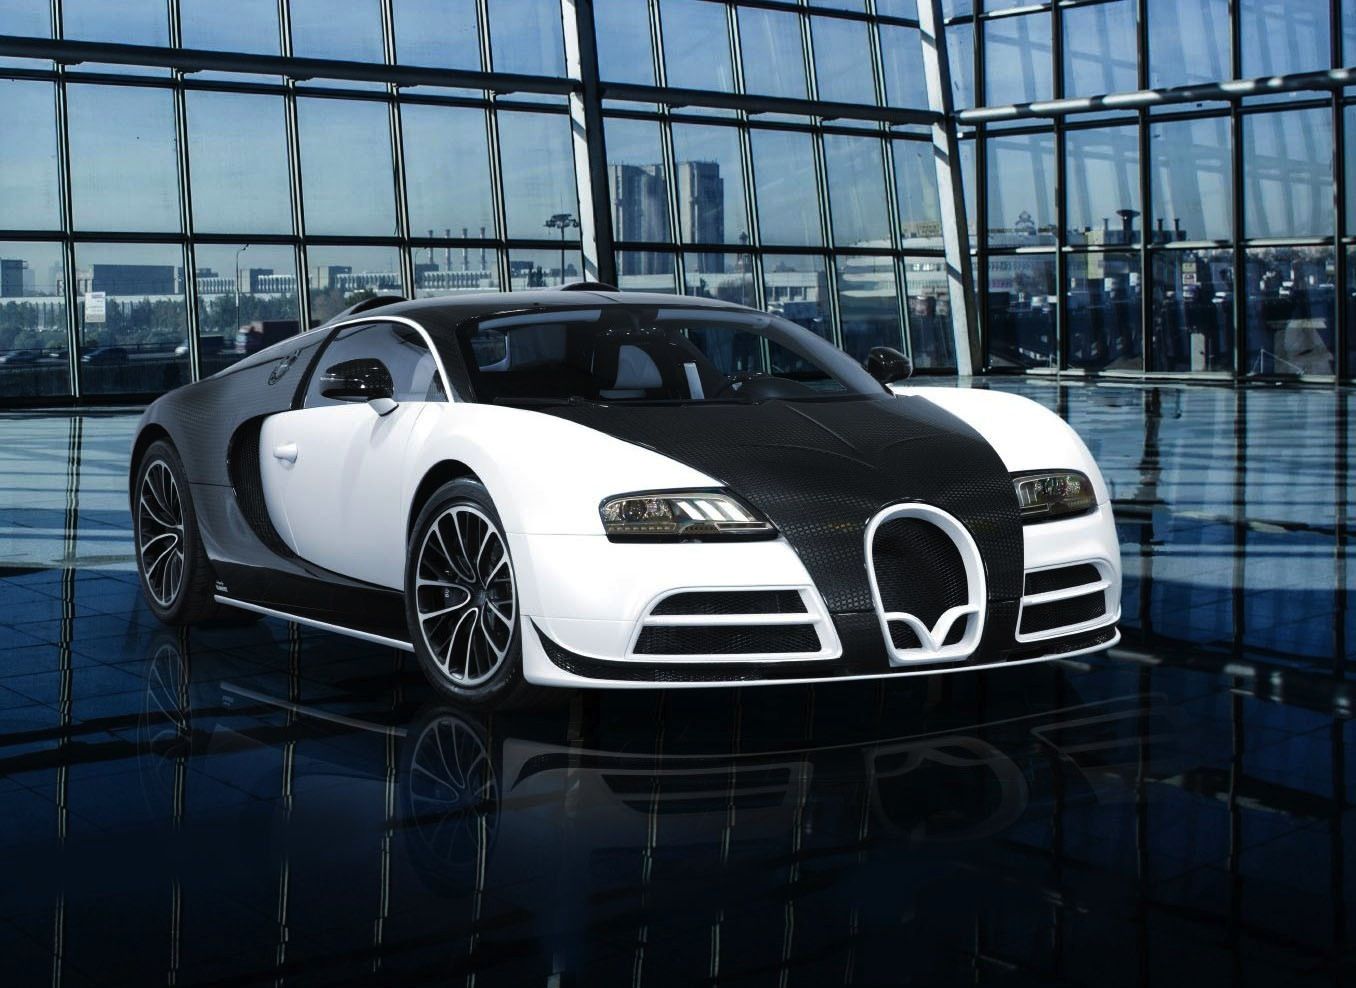 Limited Edition Bugatti Veyron by Masonry Vivere - 3.4 million 